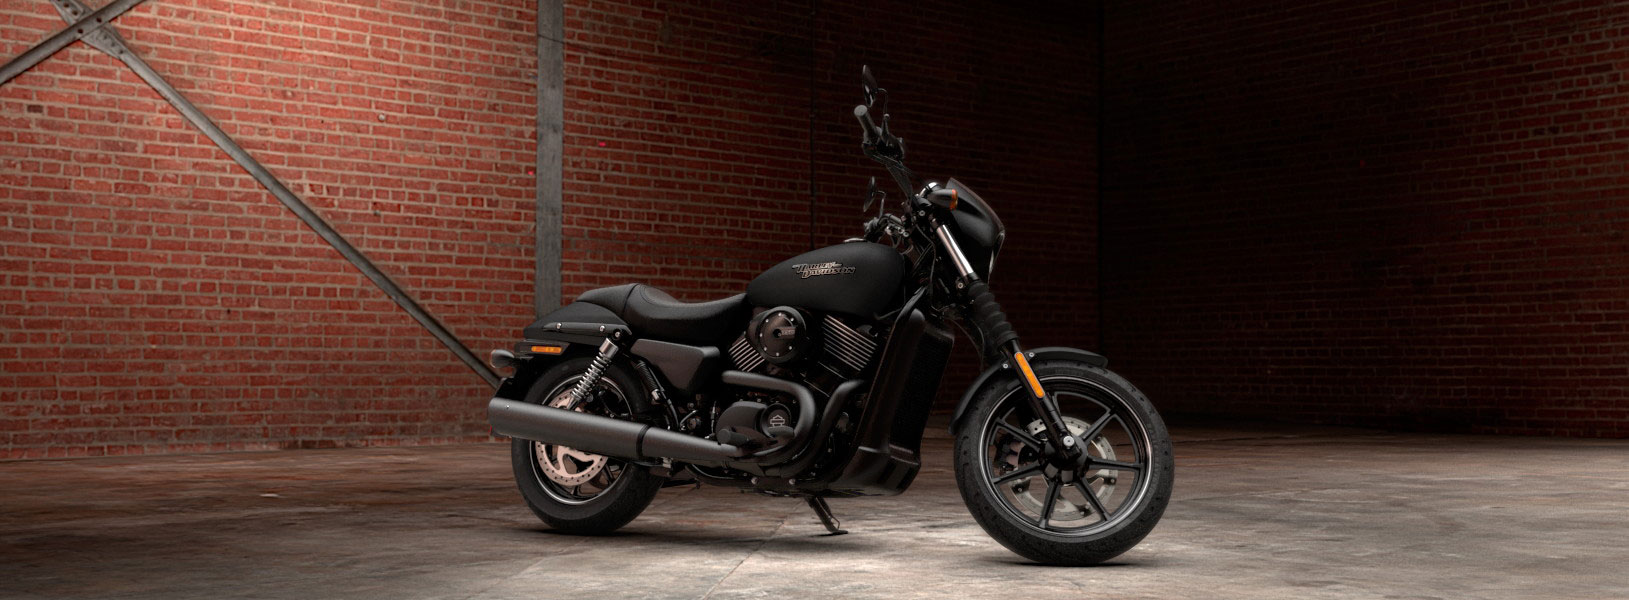 Harley Davidson Street 750 Vivid Black - HD Wallpaper 